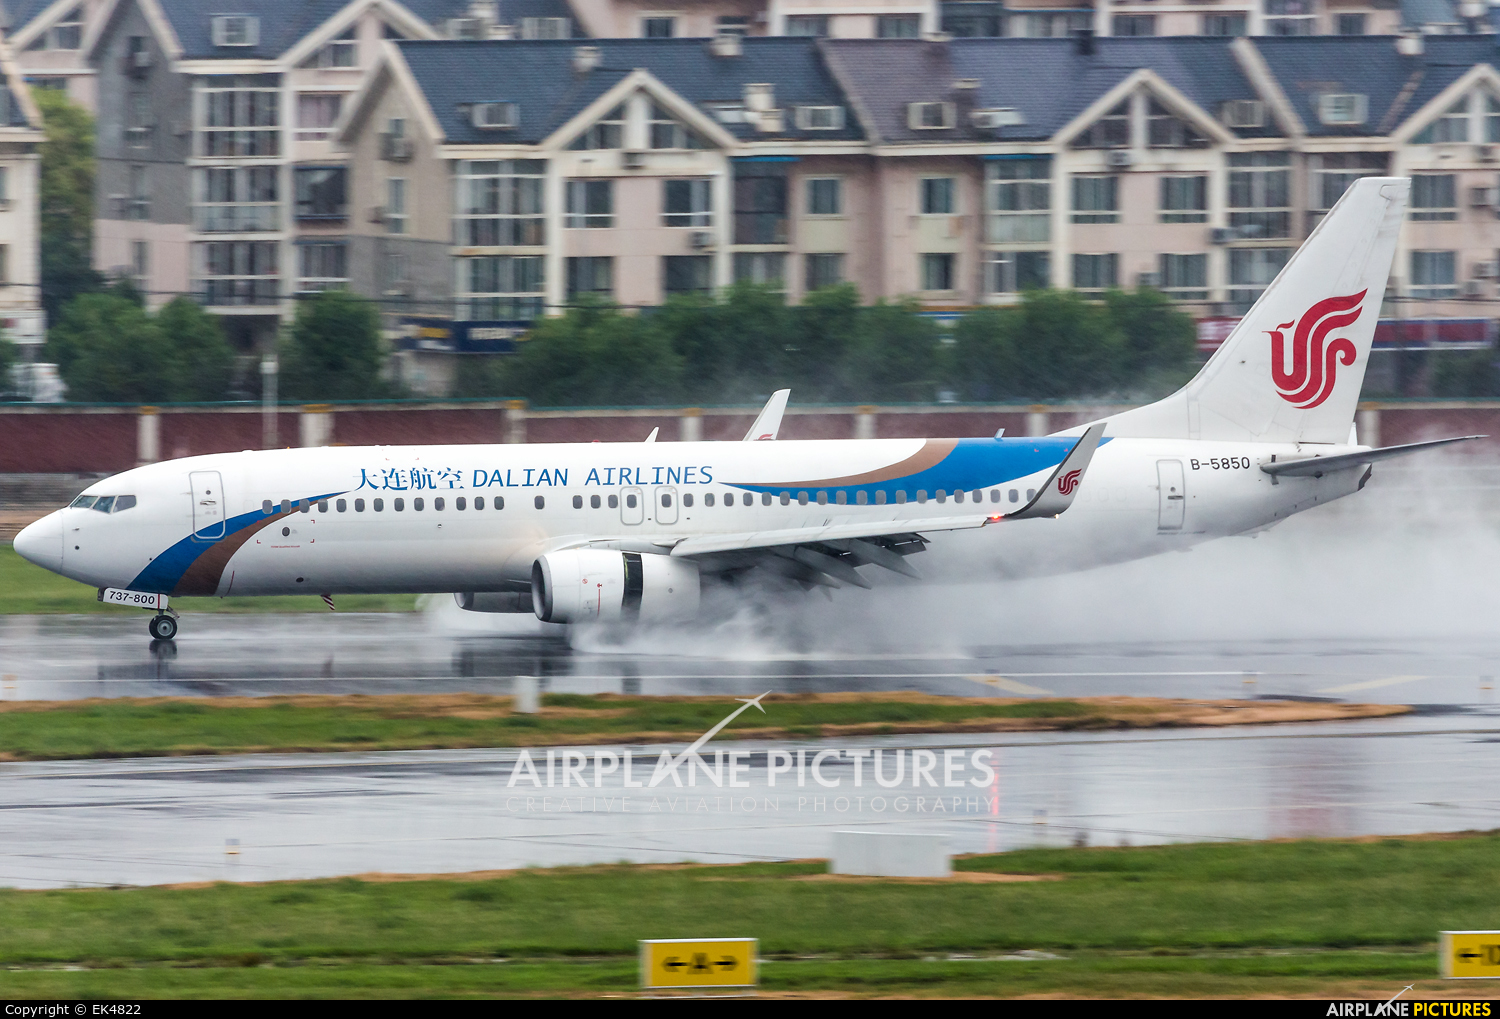 Dalian Airlines B-5850 aircraft at Dalian Zhoushuizi Int'l